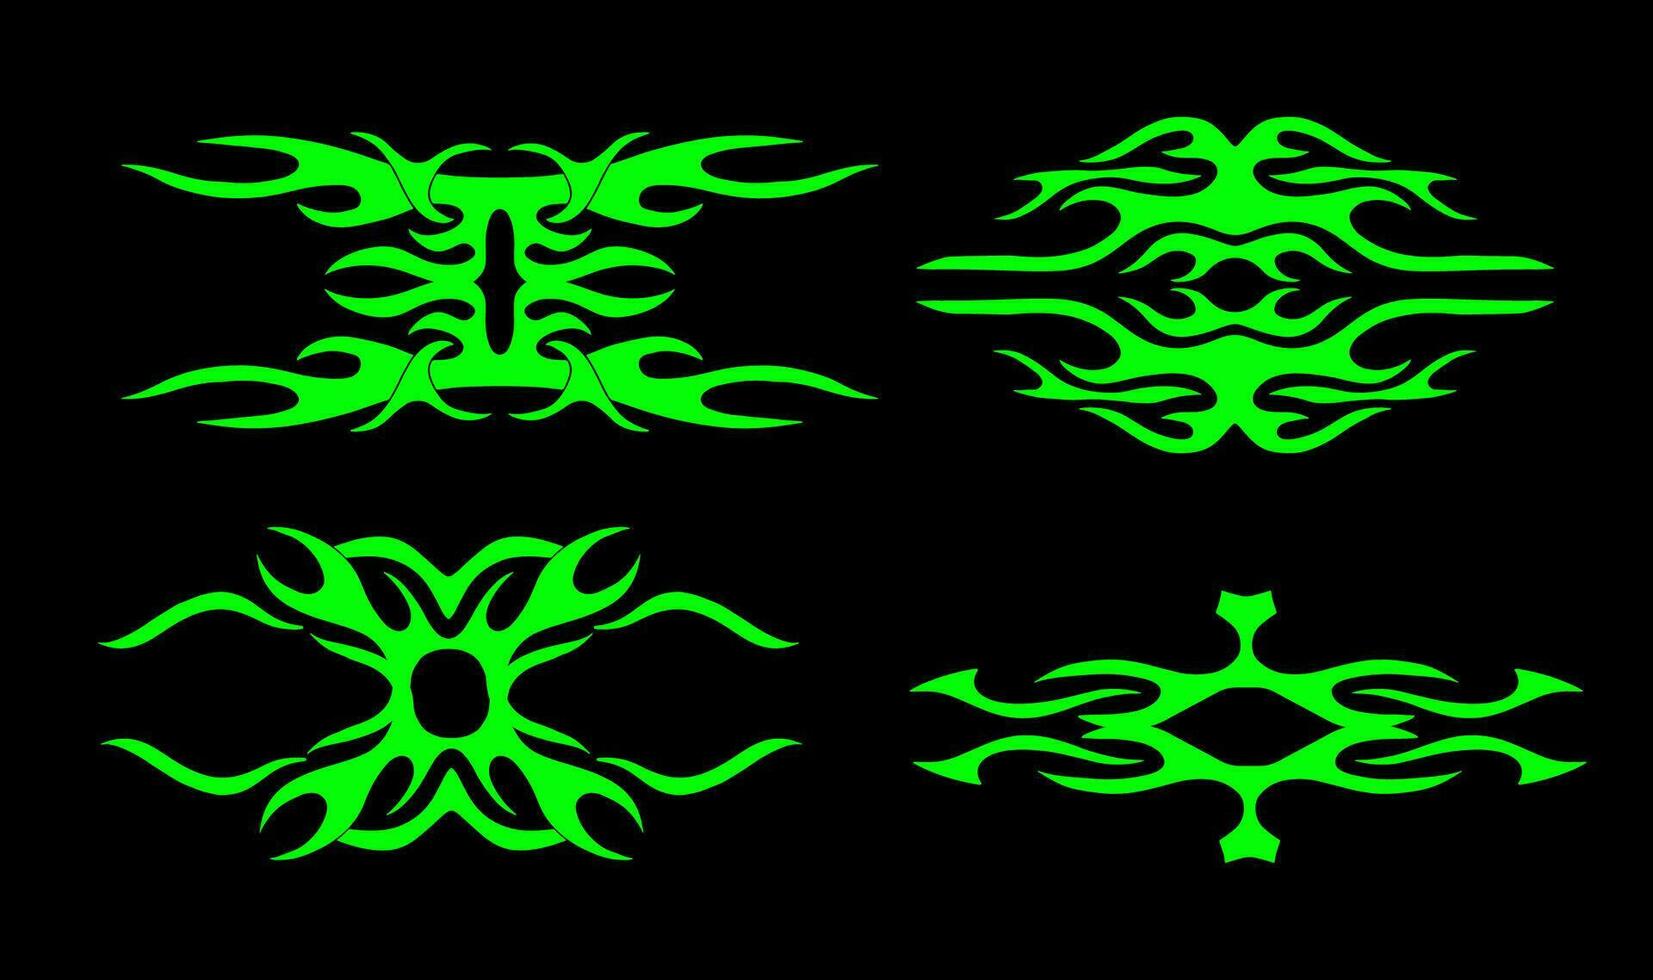 Neo tribal or cyber sigilism shape set for tattoo, streetwear etc Hand drawn symmetric vector illustration.